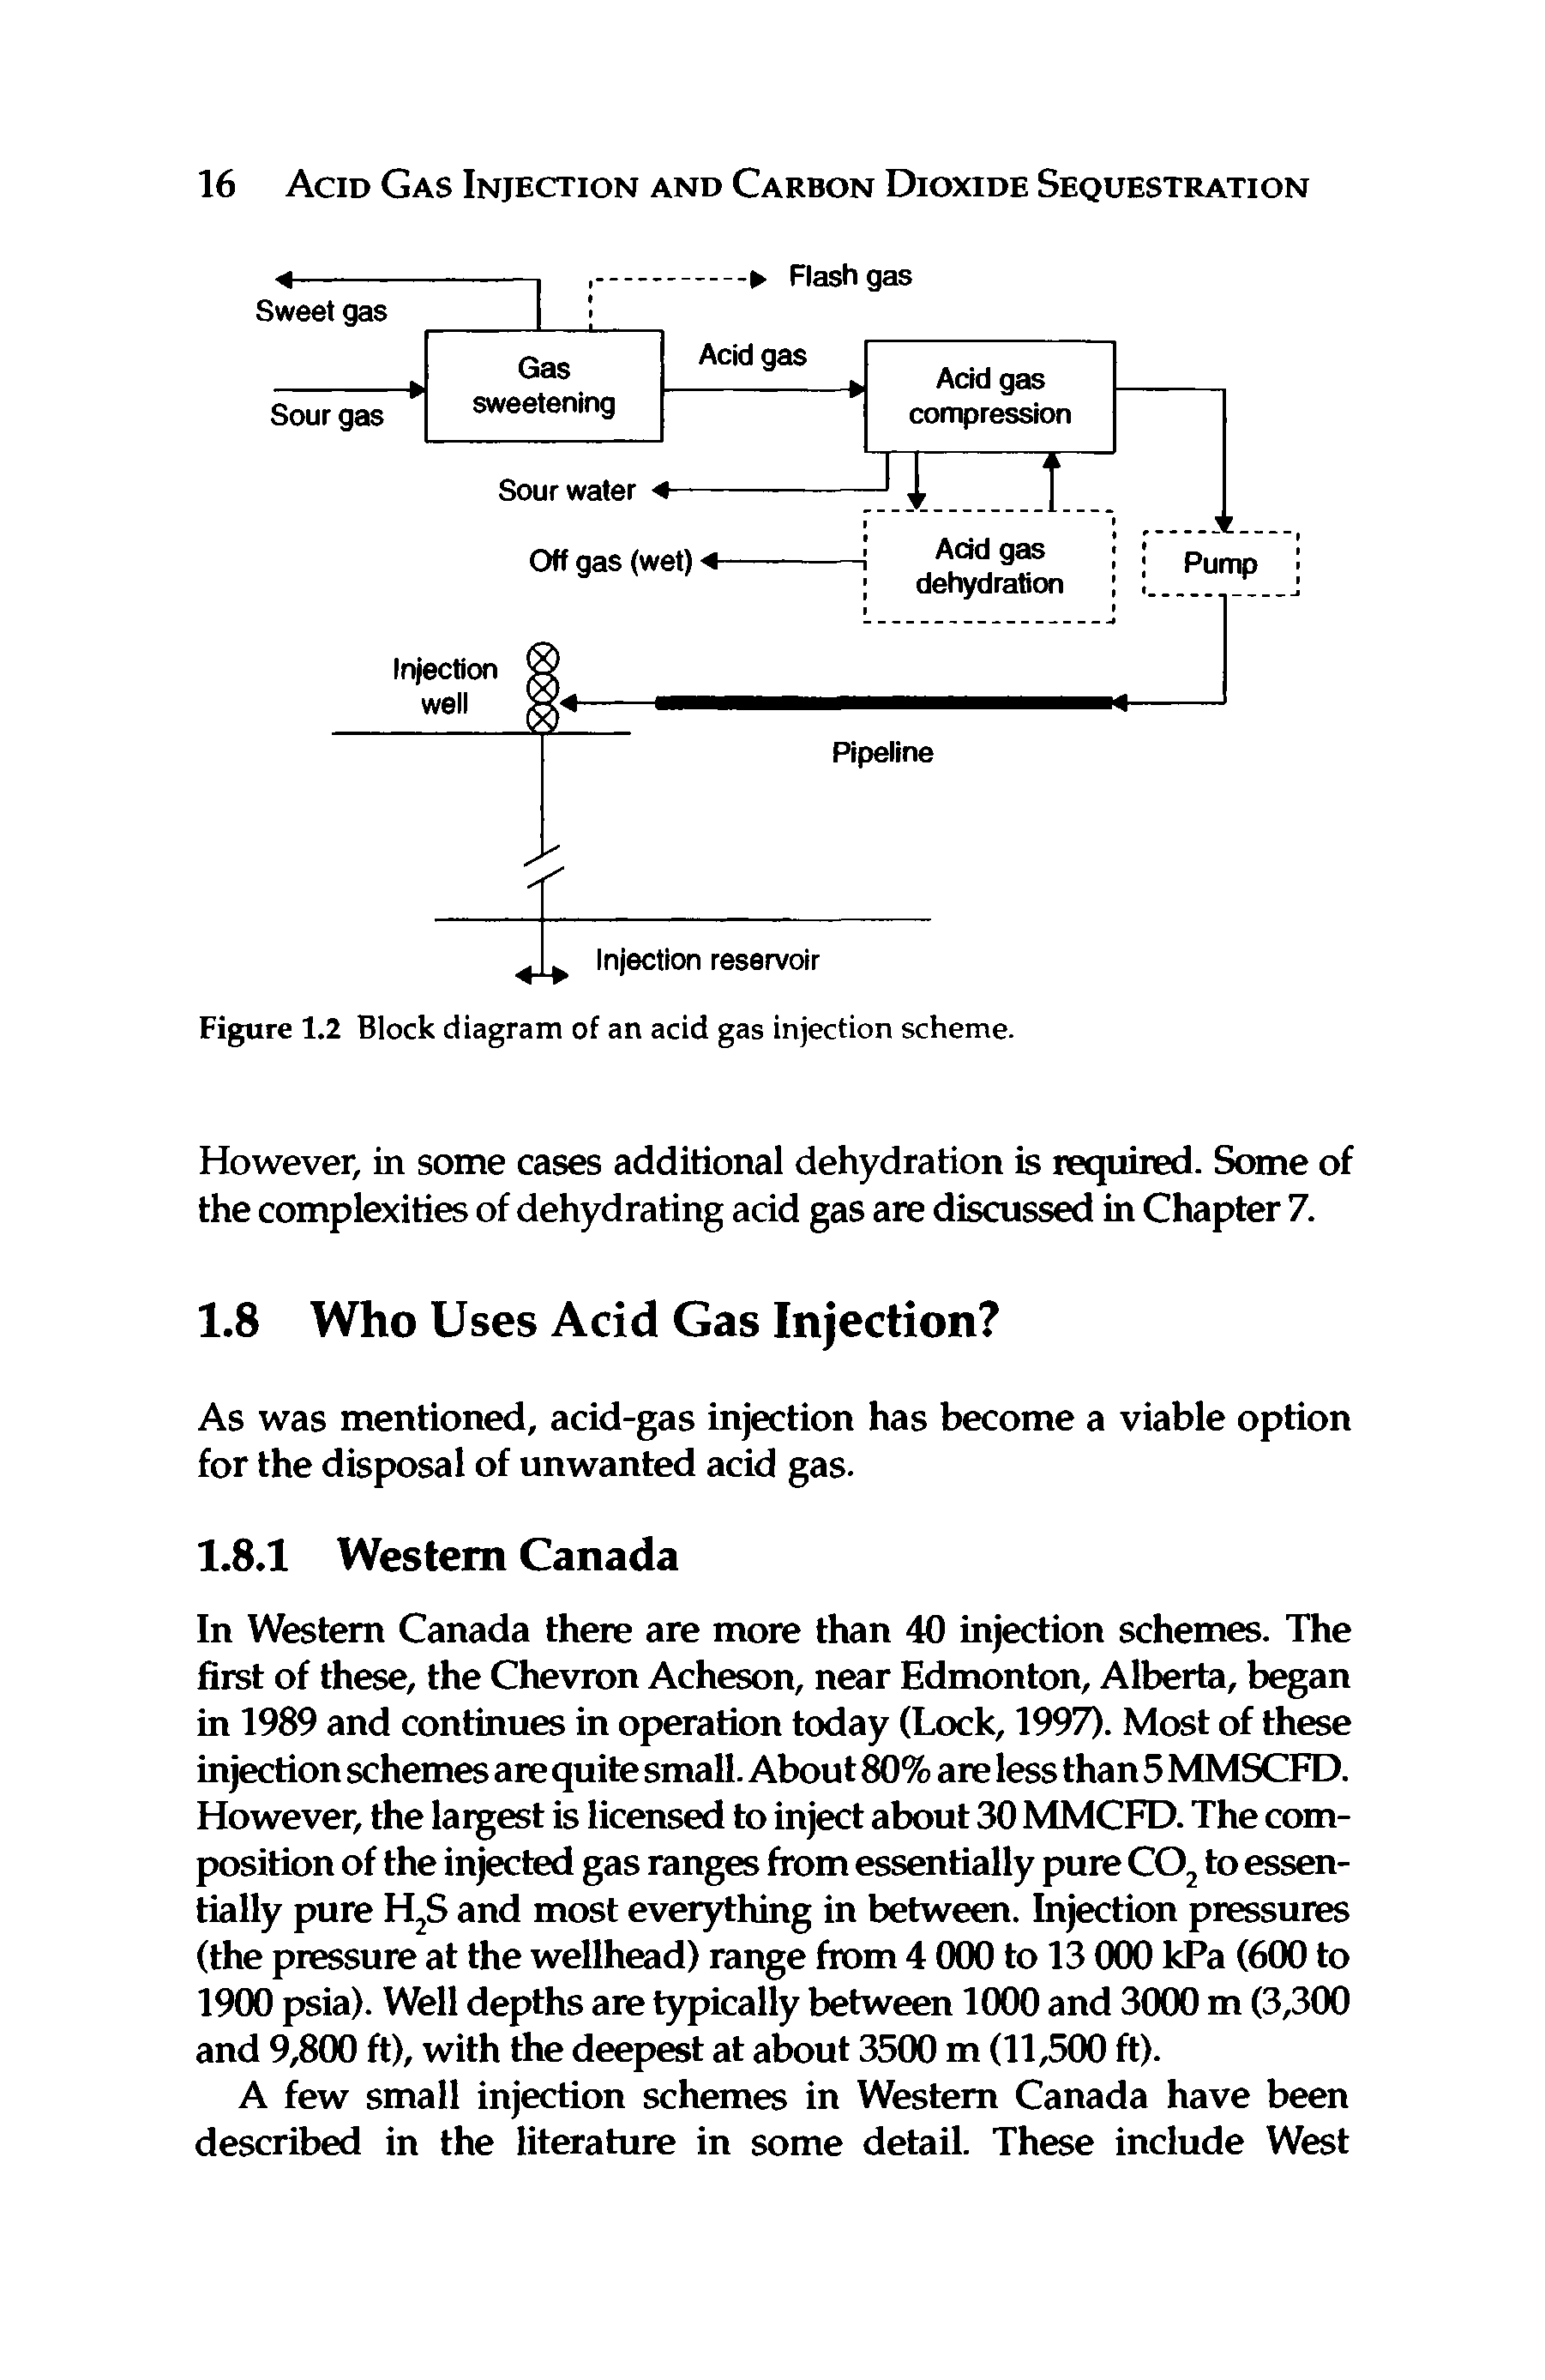 Figure 1.2 Block diagram of an acid gas injection scheme.